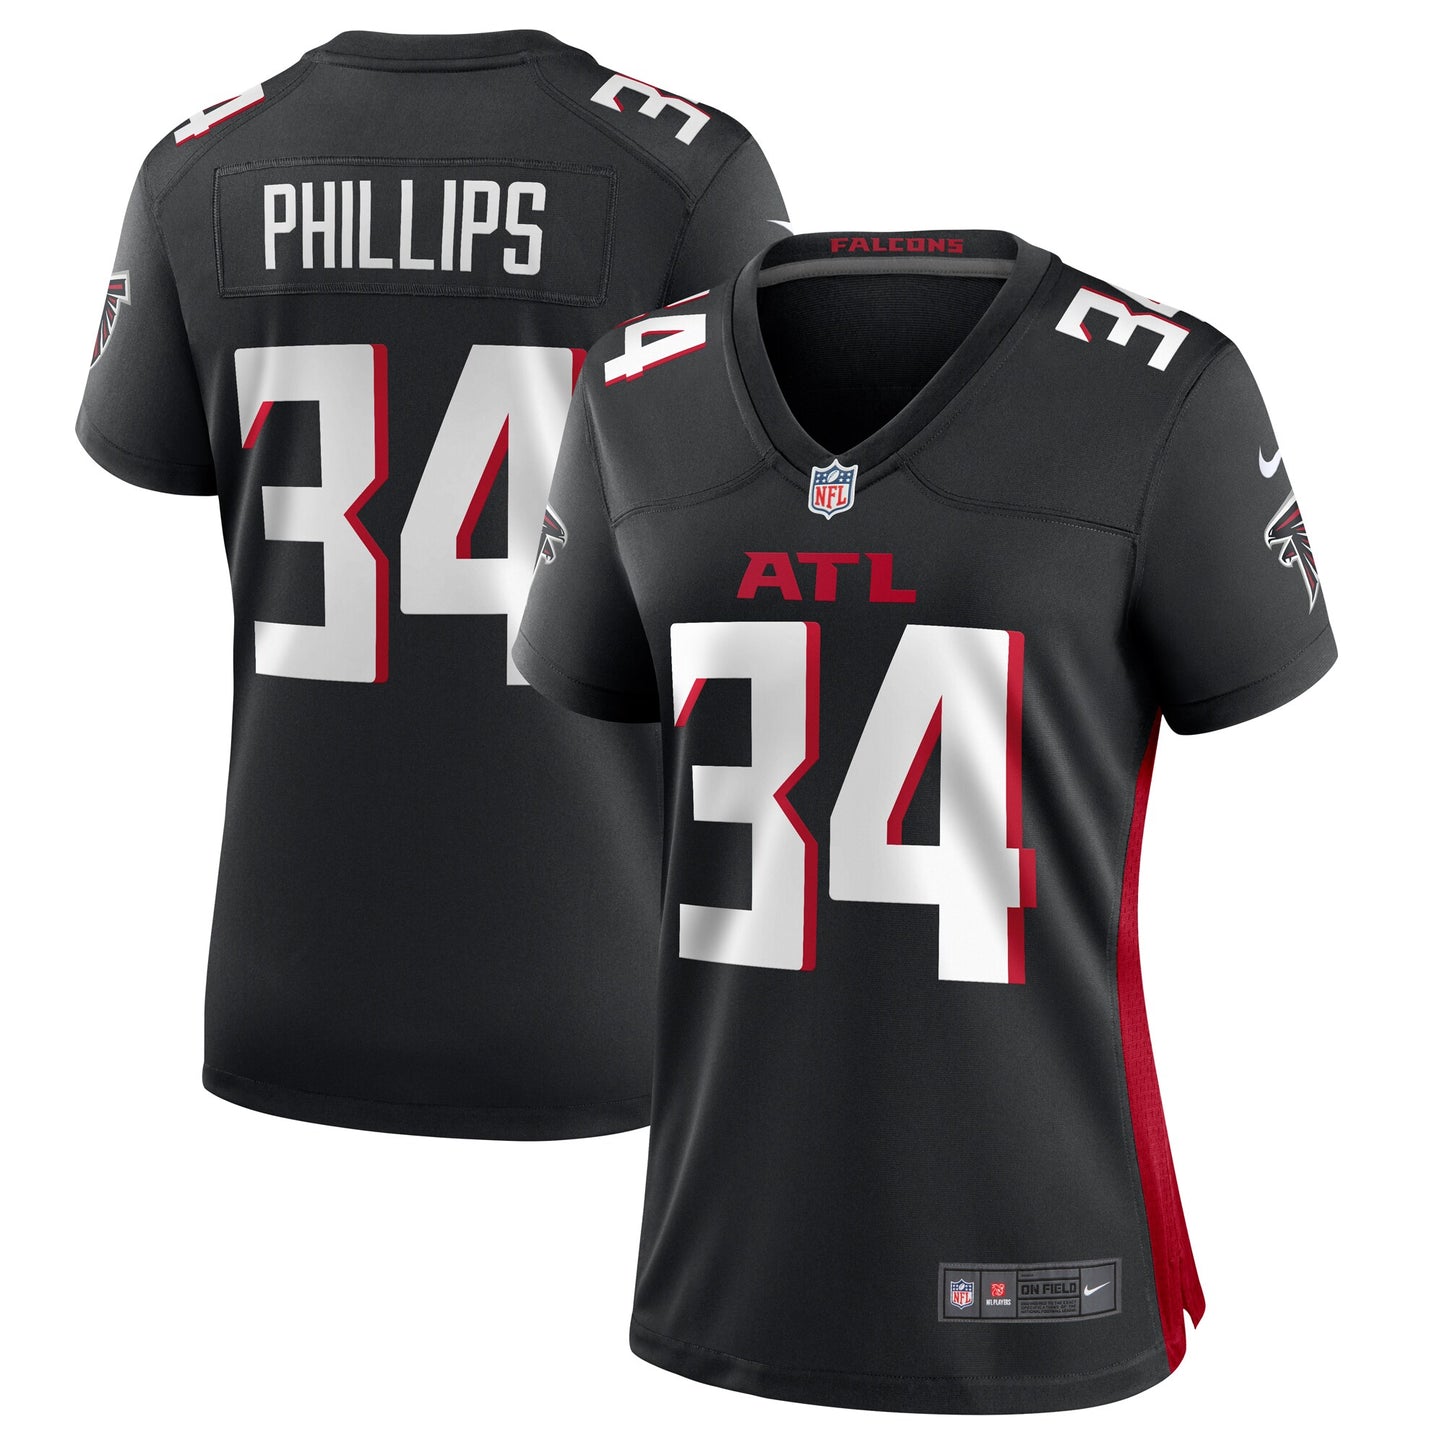 Clark Phillips III Atlanta Falcons Nike Women's Team Game Jersey - Black